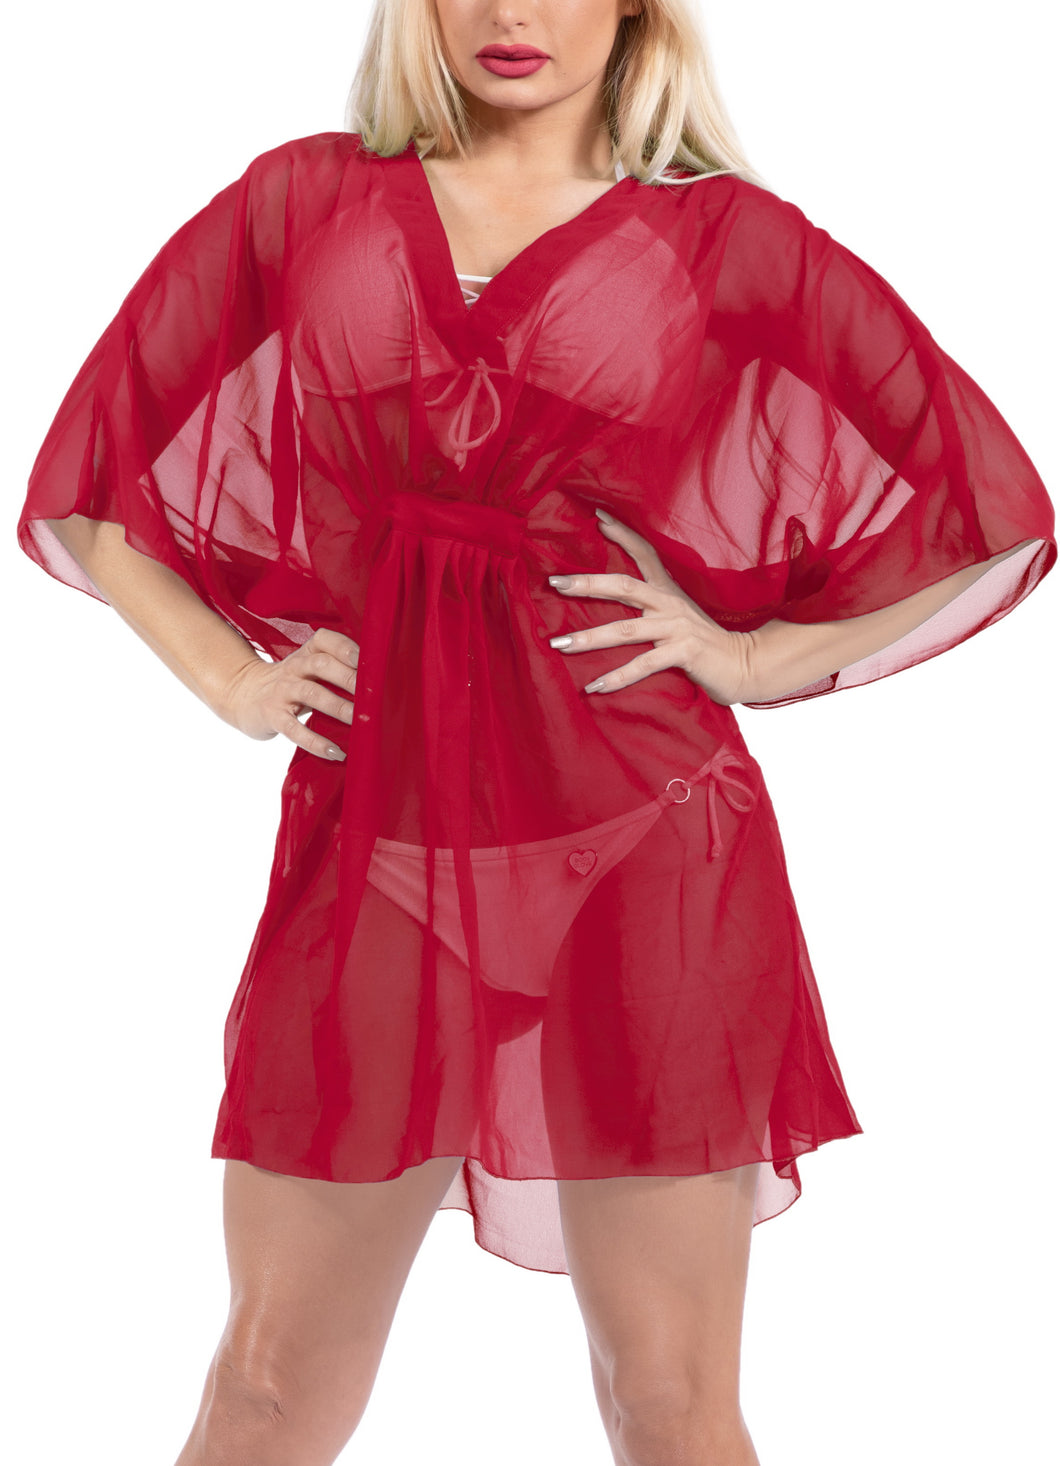 LA LEELA Swimsuit Cover ups Beach Kimono Dress For Women Red_Y408 OSFM 4-14{S-L]